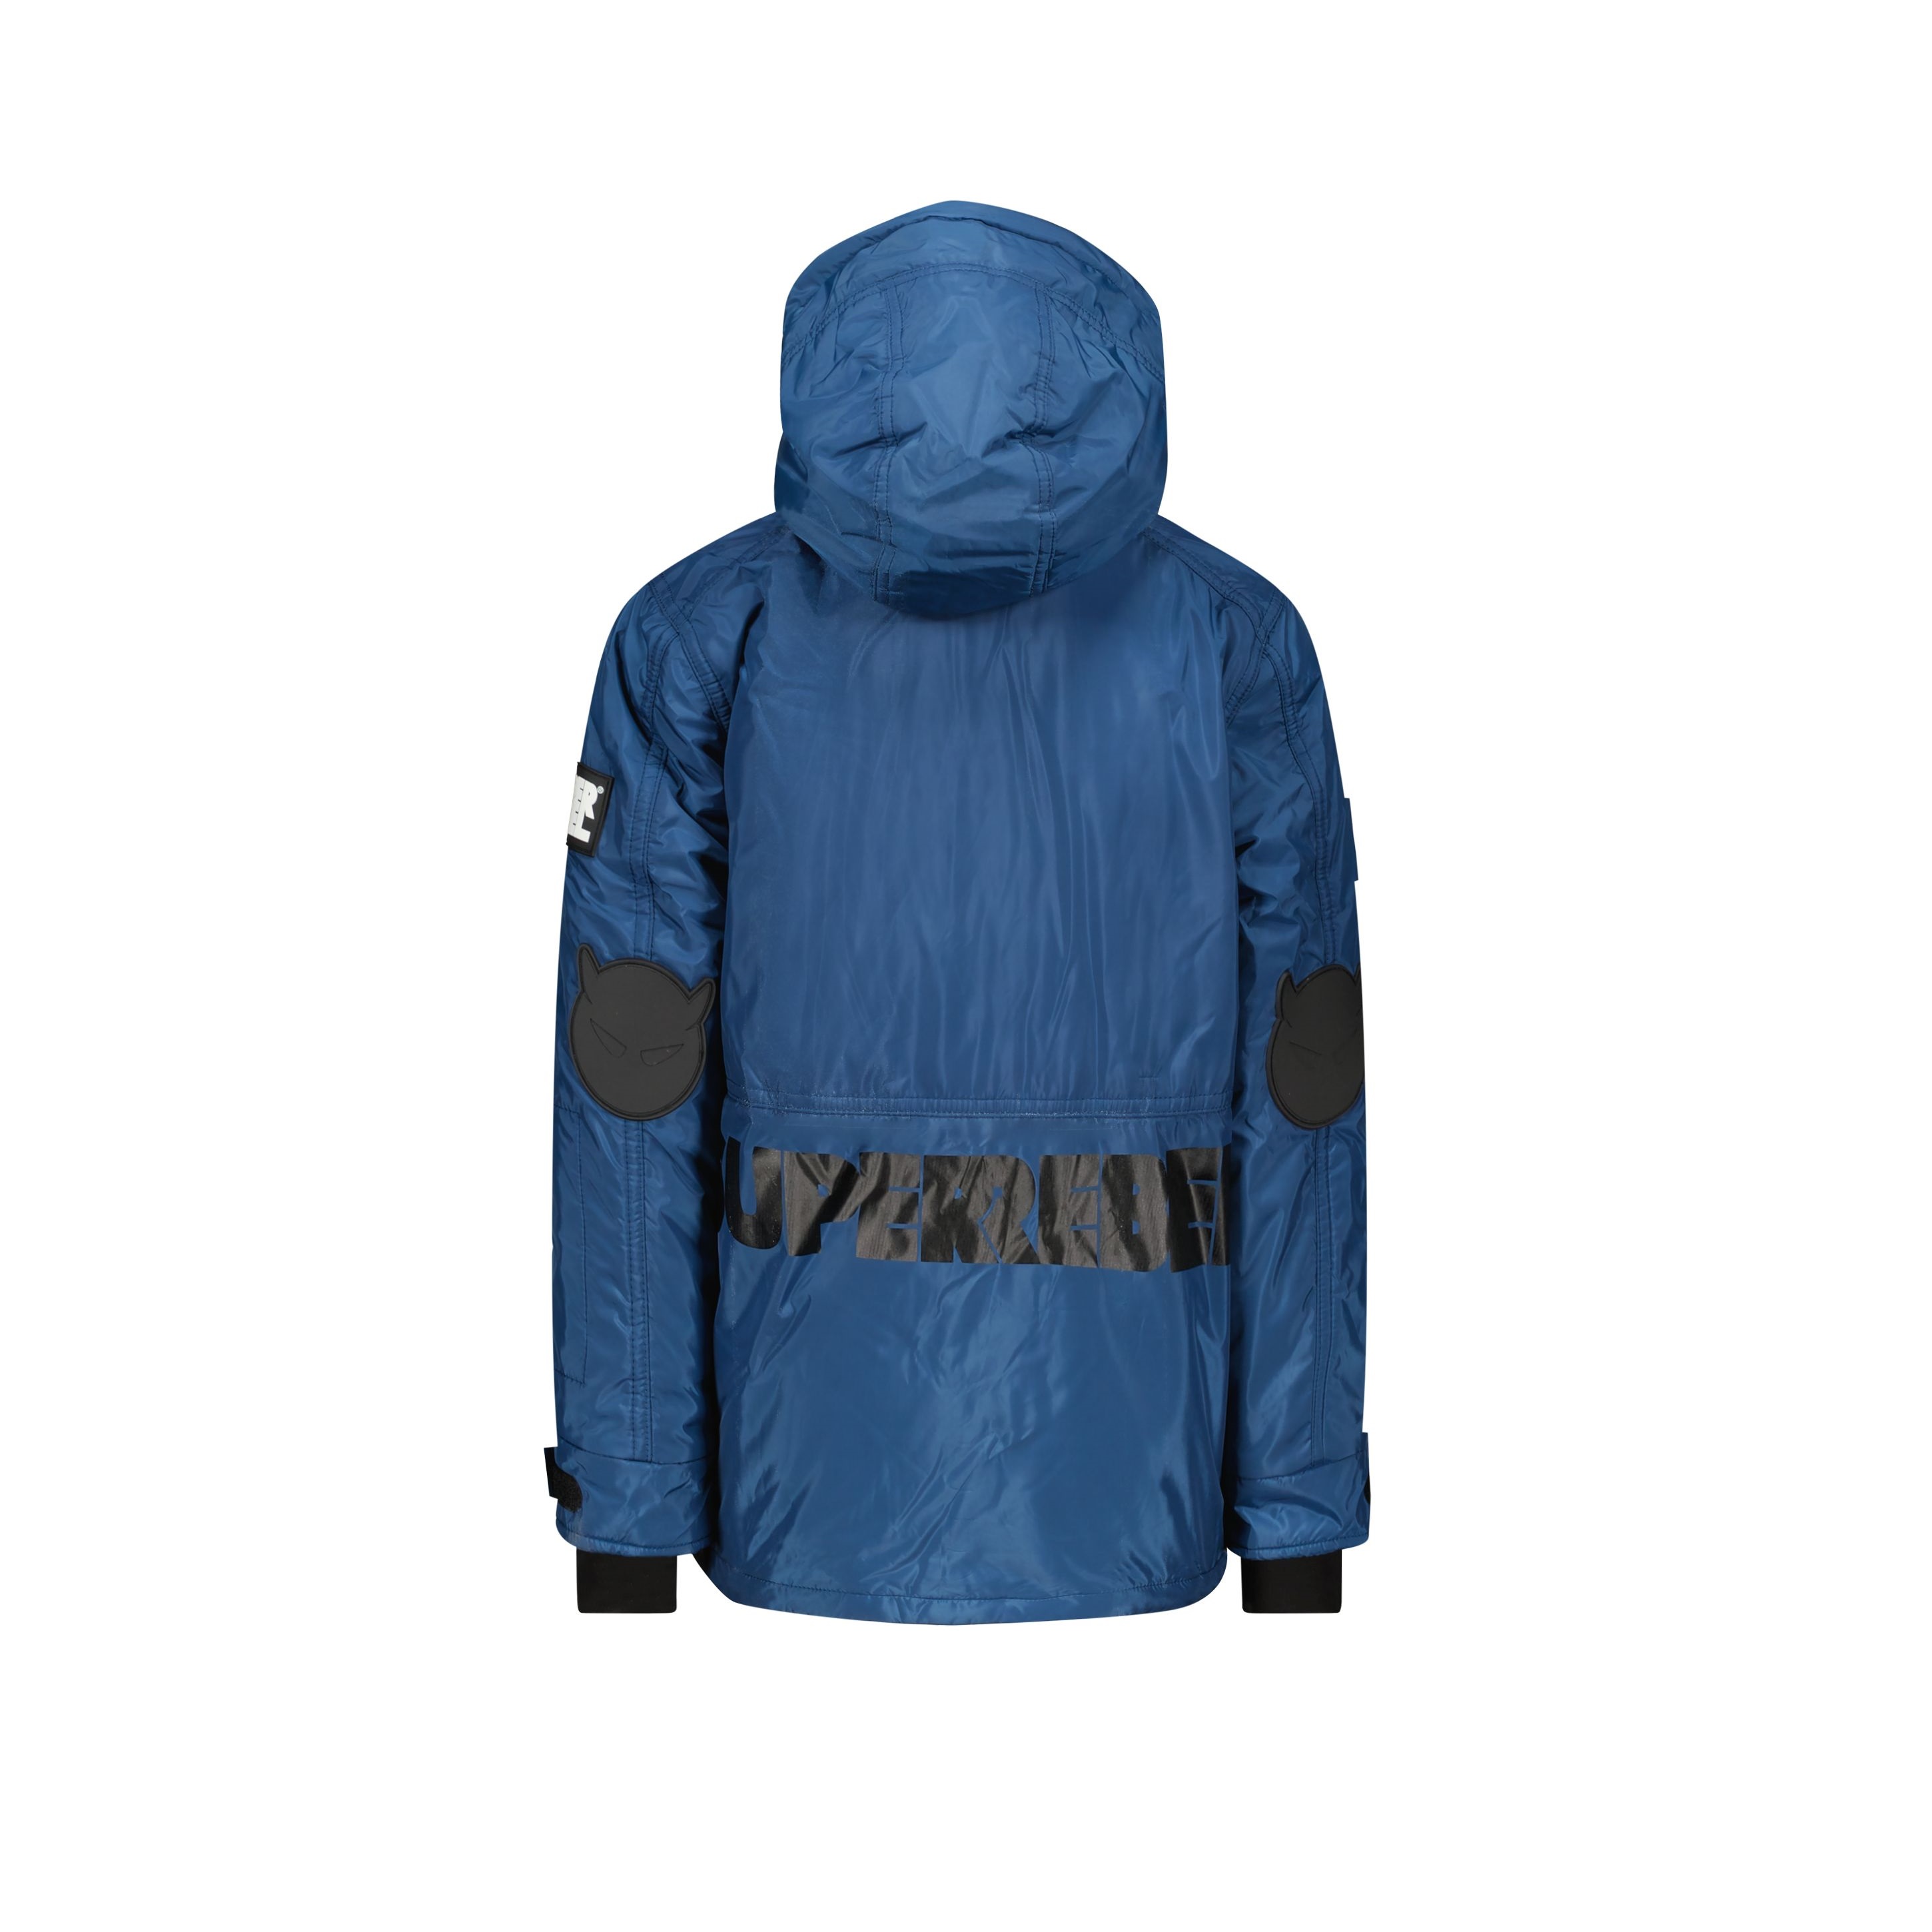  Ski & Snow Jackets -  superrebel SPEAR Jacket